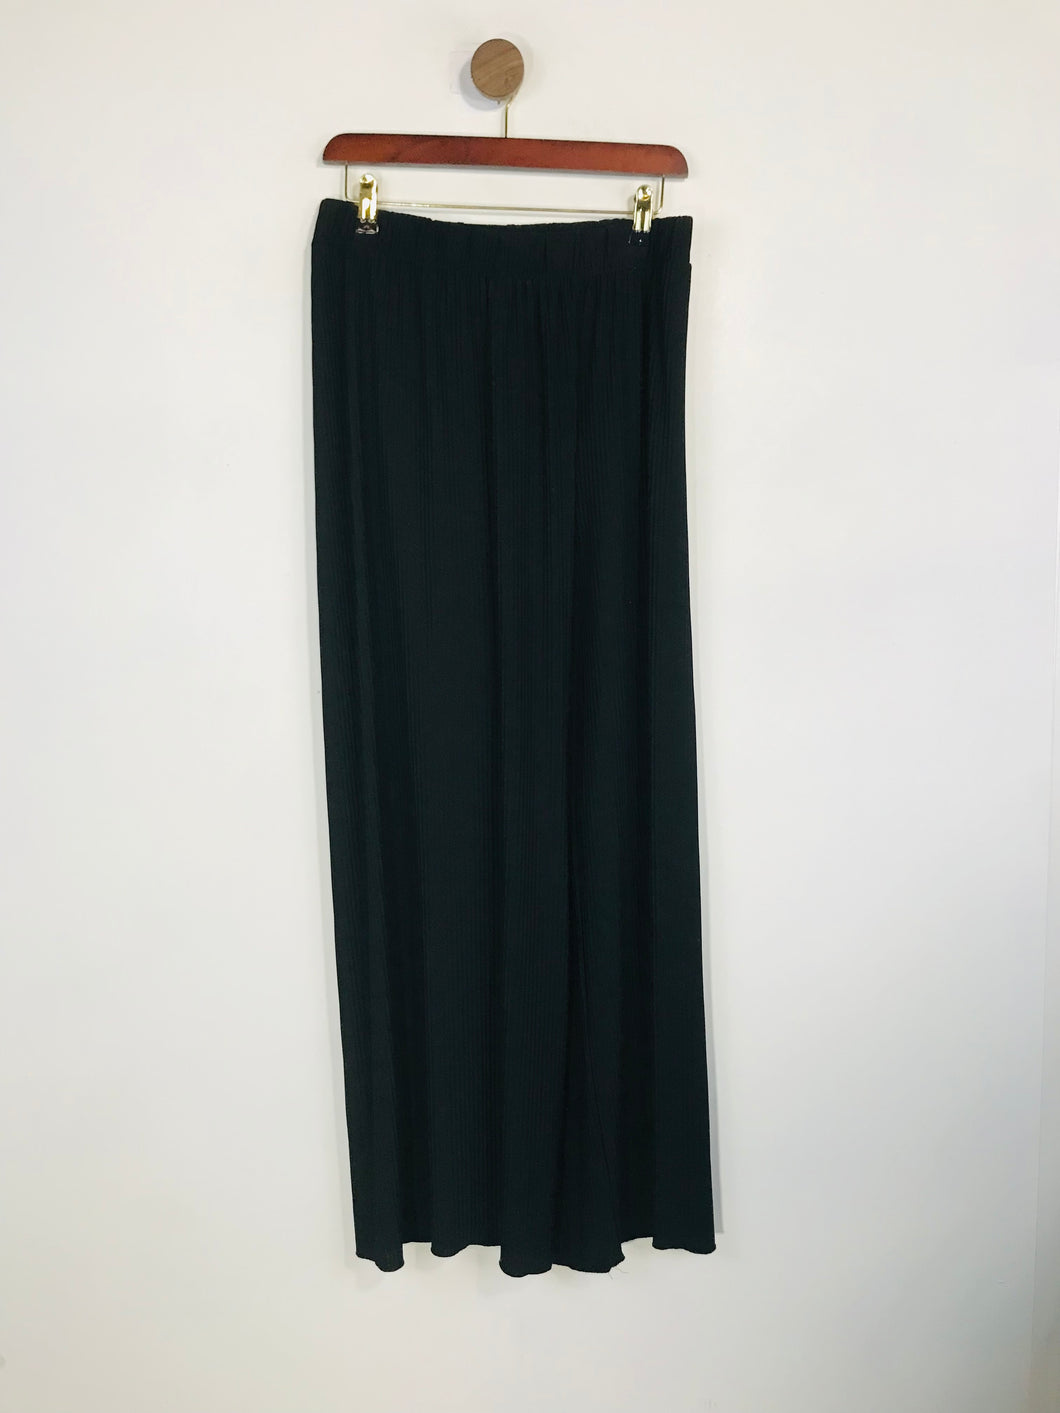 Zara Women's Striped Culottes Trousers | XL UK16 | Black